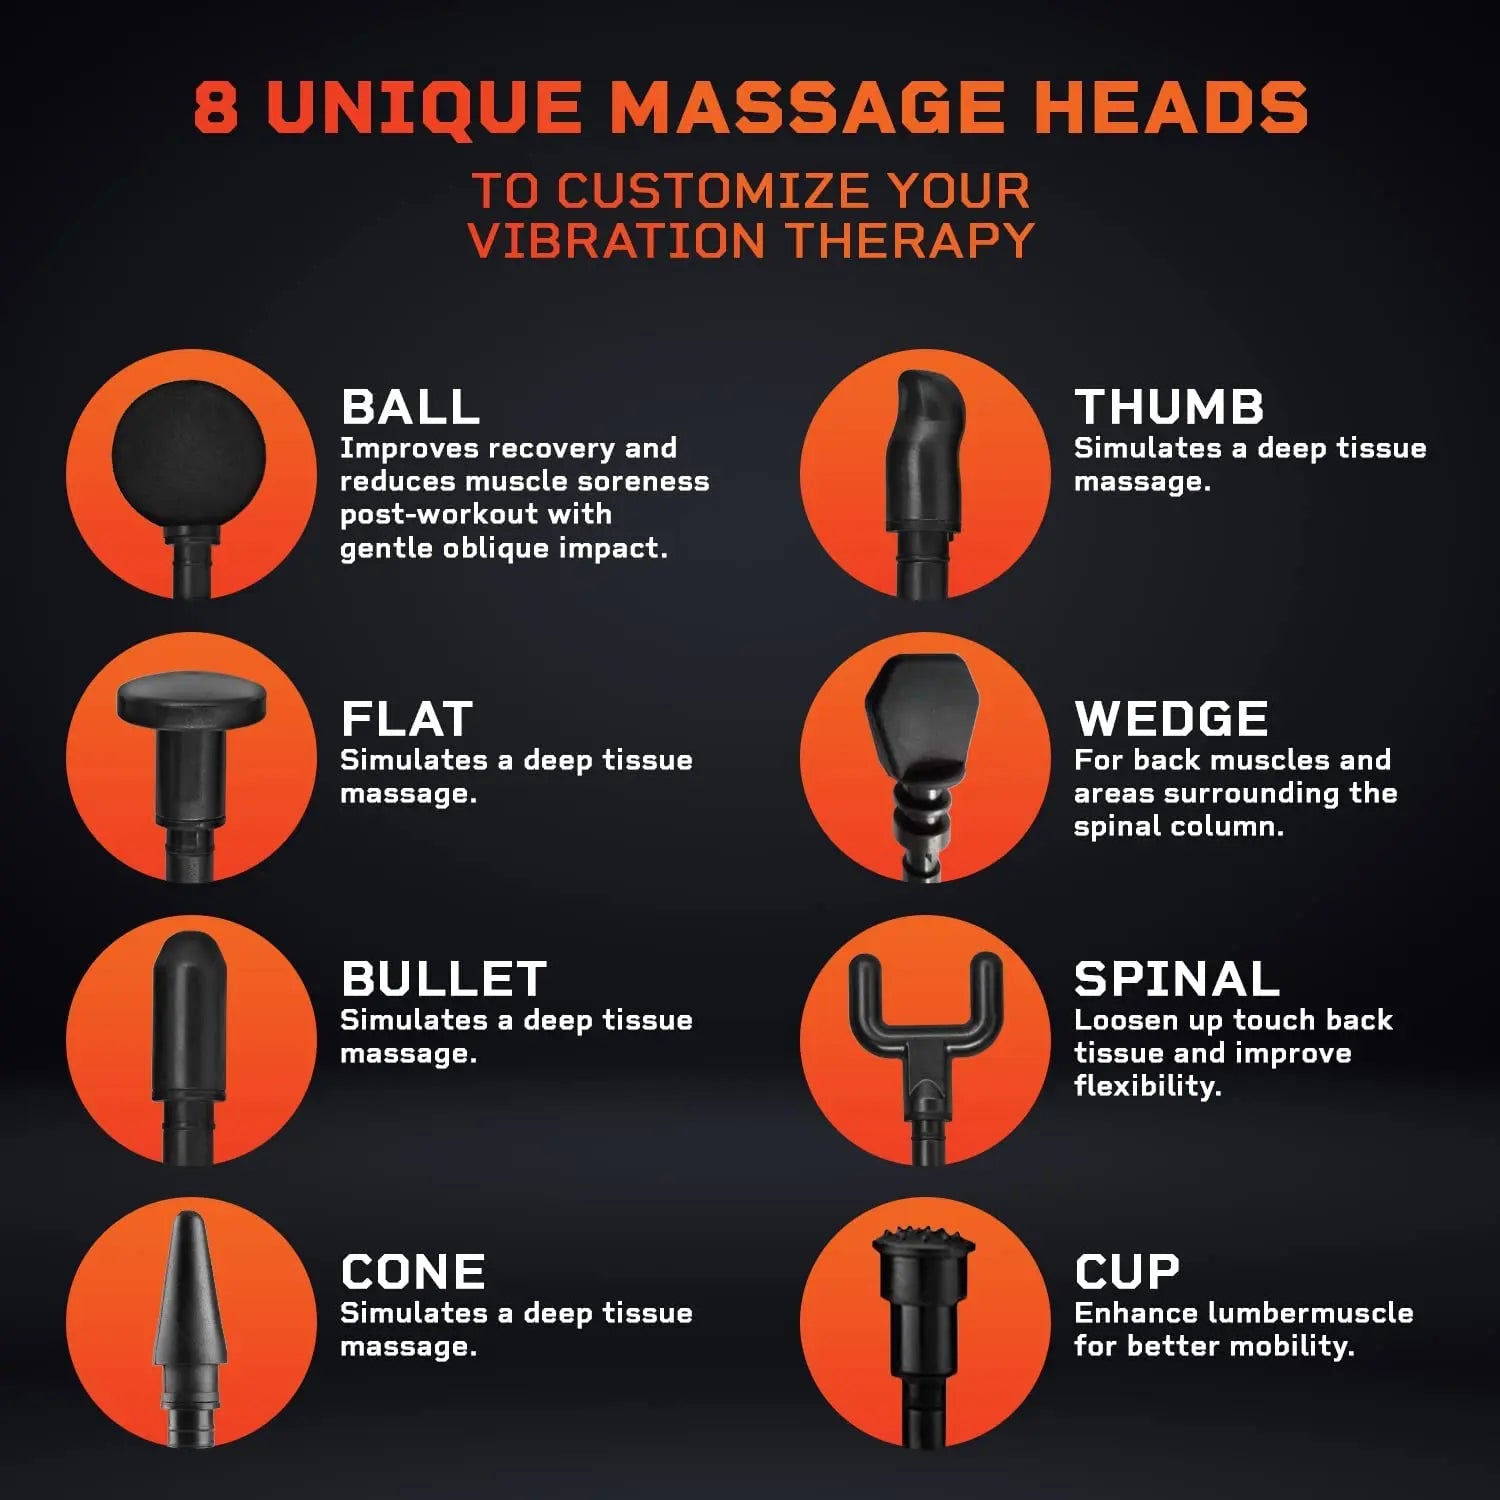 Percussion vs vibration massage 